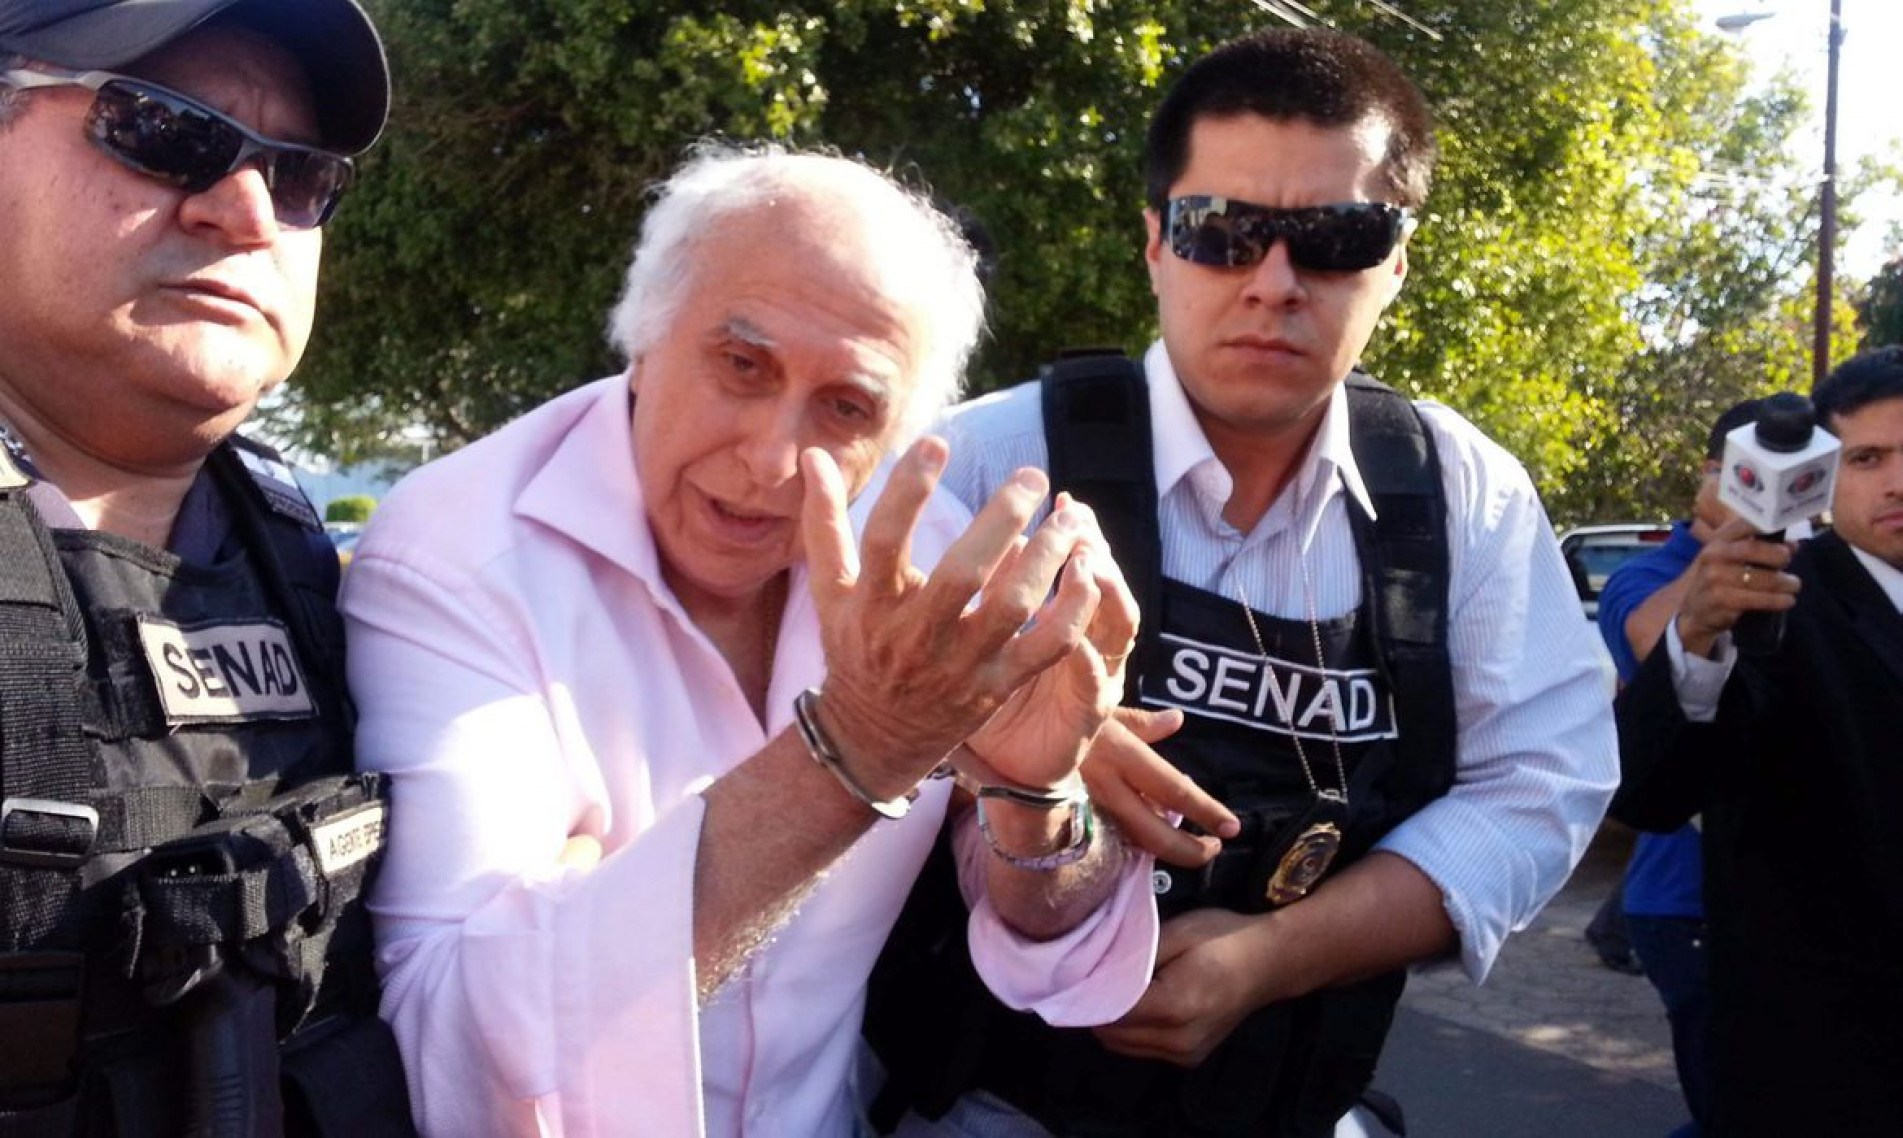 TJ-SP concede prisão domiciliar ao ex-médico Roger Abdelmassih